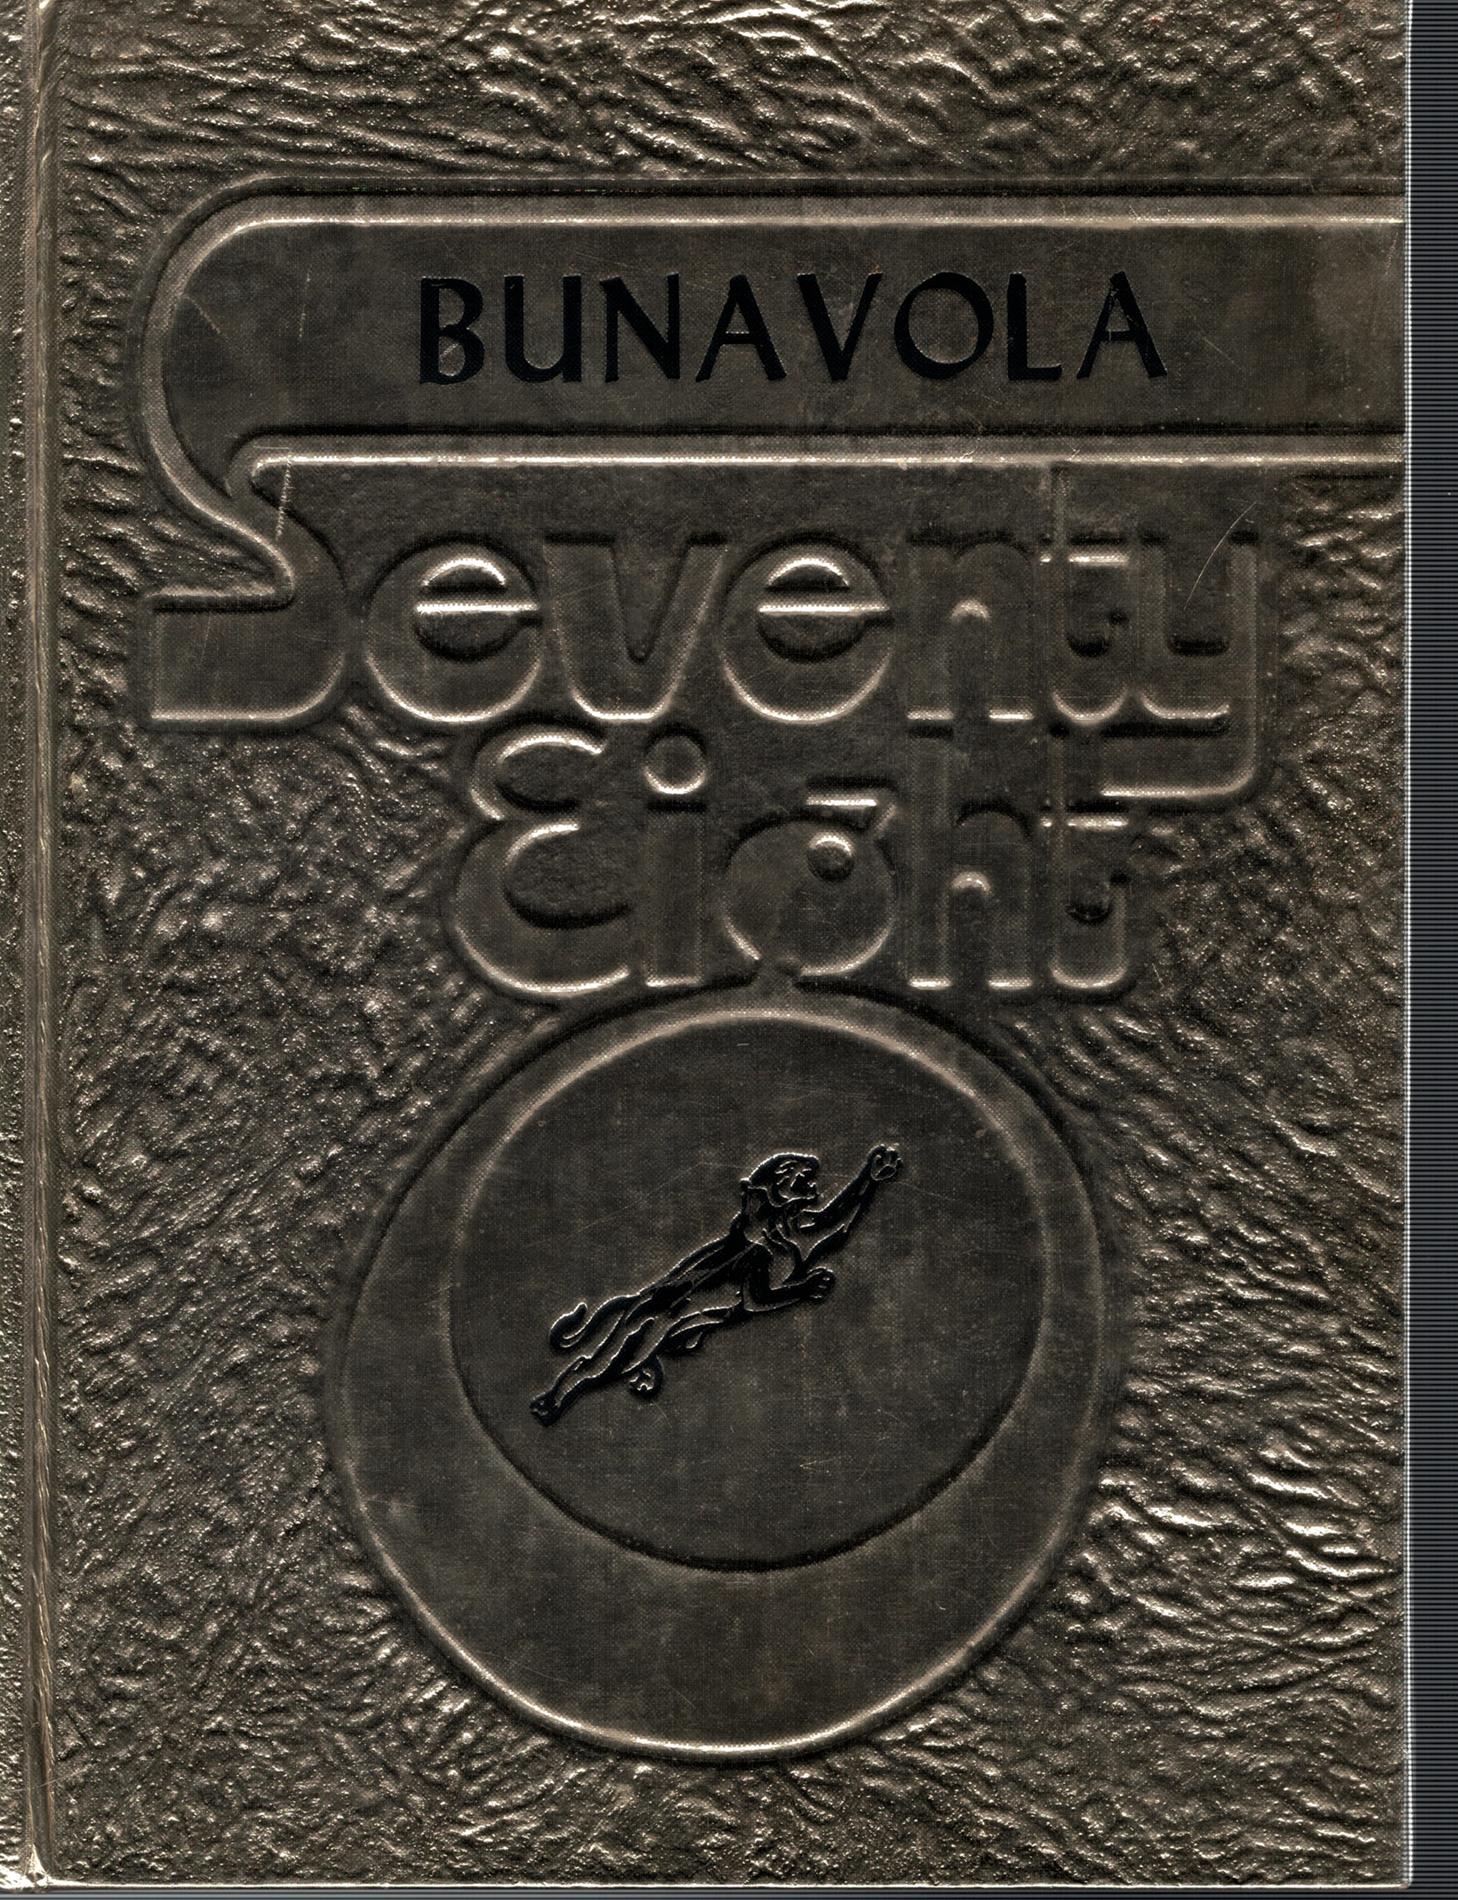 1978 Bunavola